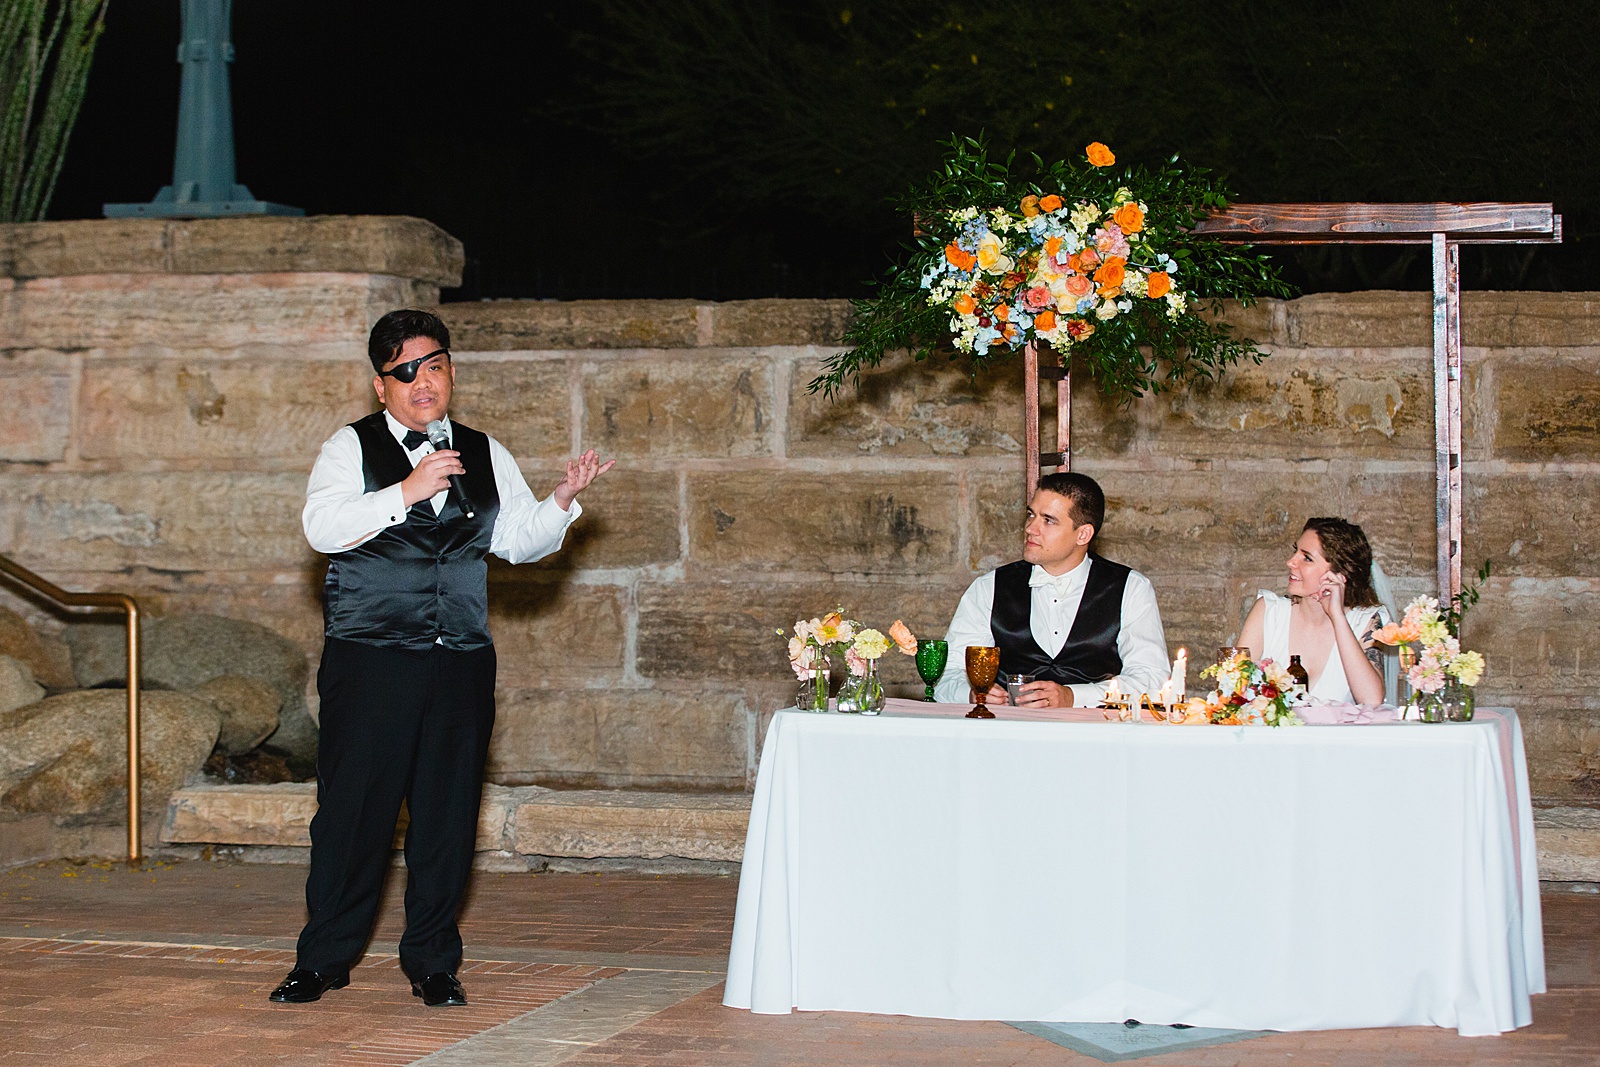 Toasts at Arizona Historical Society wedding reception by Tempe wedding photographer PMA Photography.